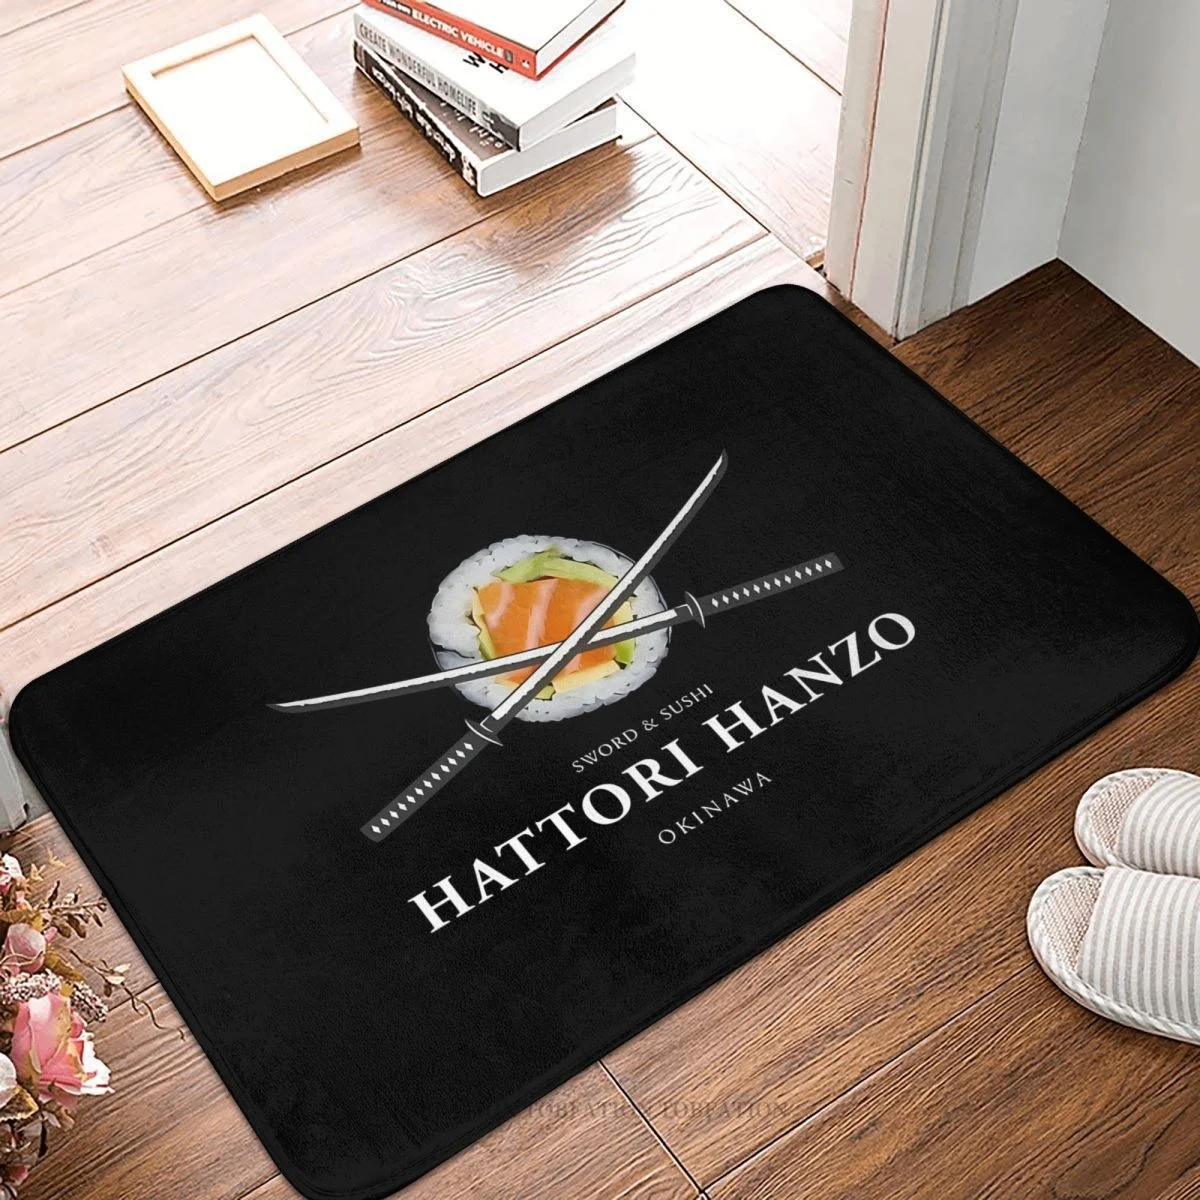 

Movie Kill Bill Non-Slip Doormat Hattori Hanzo Sushi Bath Kitchen Mat Outdoor Carpet Home Modern Decor